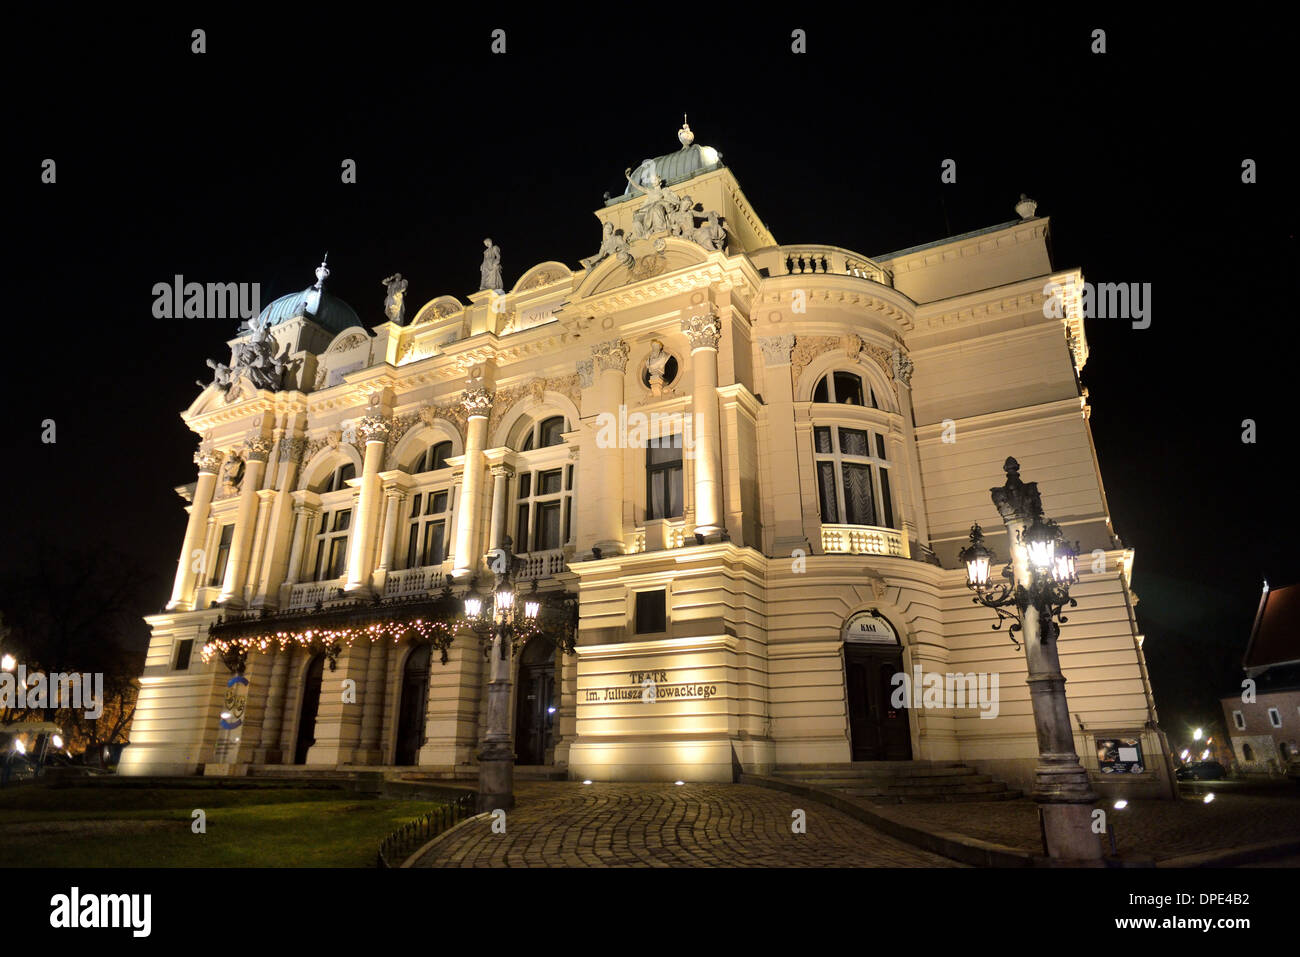 Cracovia (Cracovia), juliusz slowacki theatre krakov Polonia facciata vista notte. barocco europeo teatri. Foto Stock